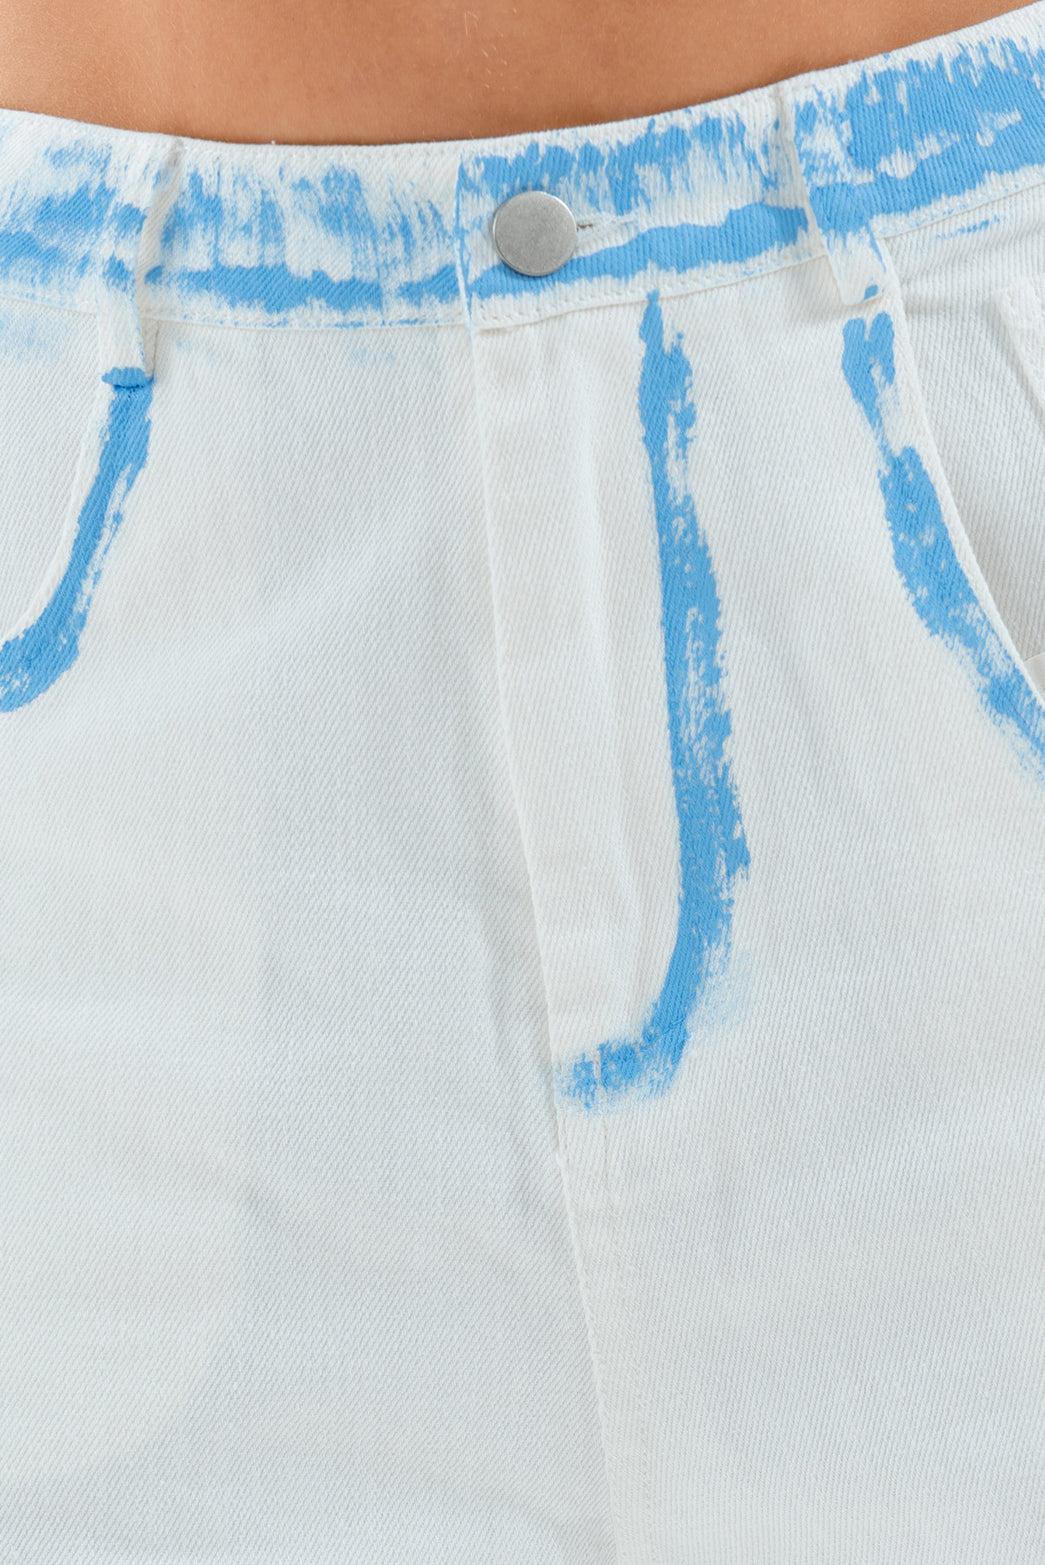 White Denim Spray Painting Stroke Jeans